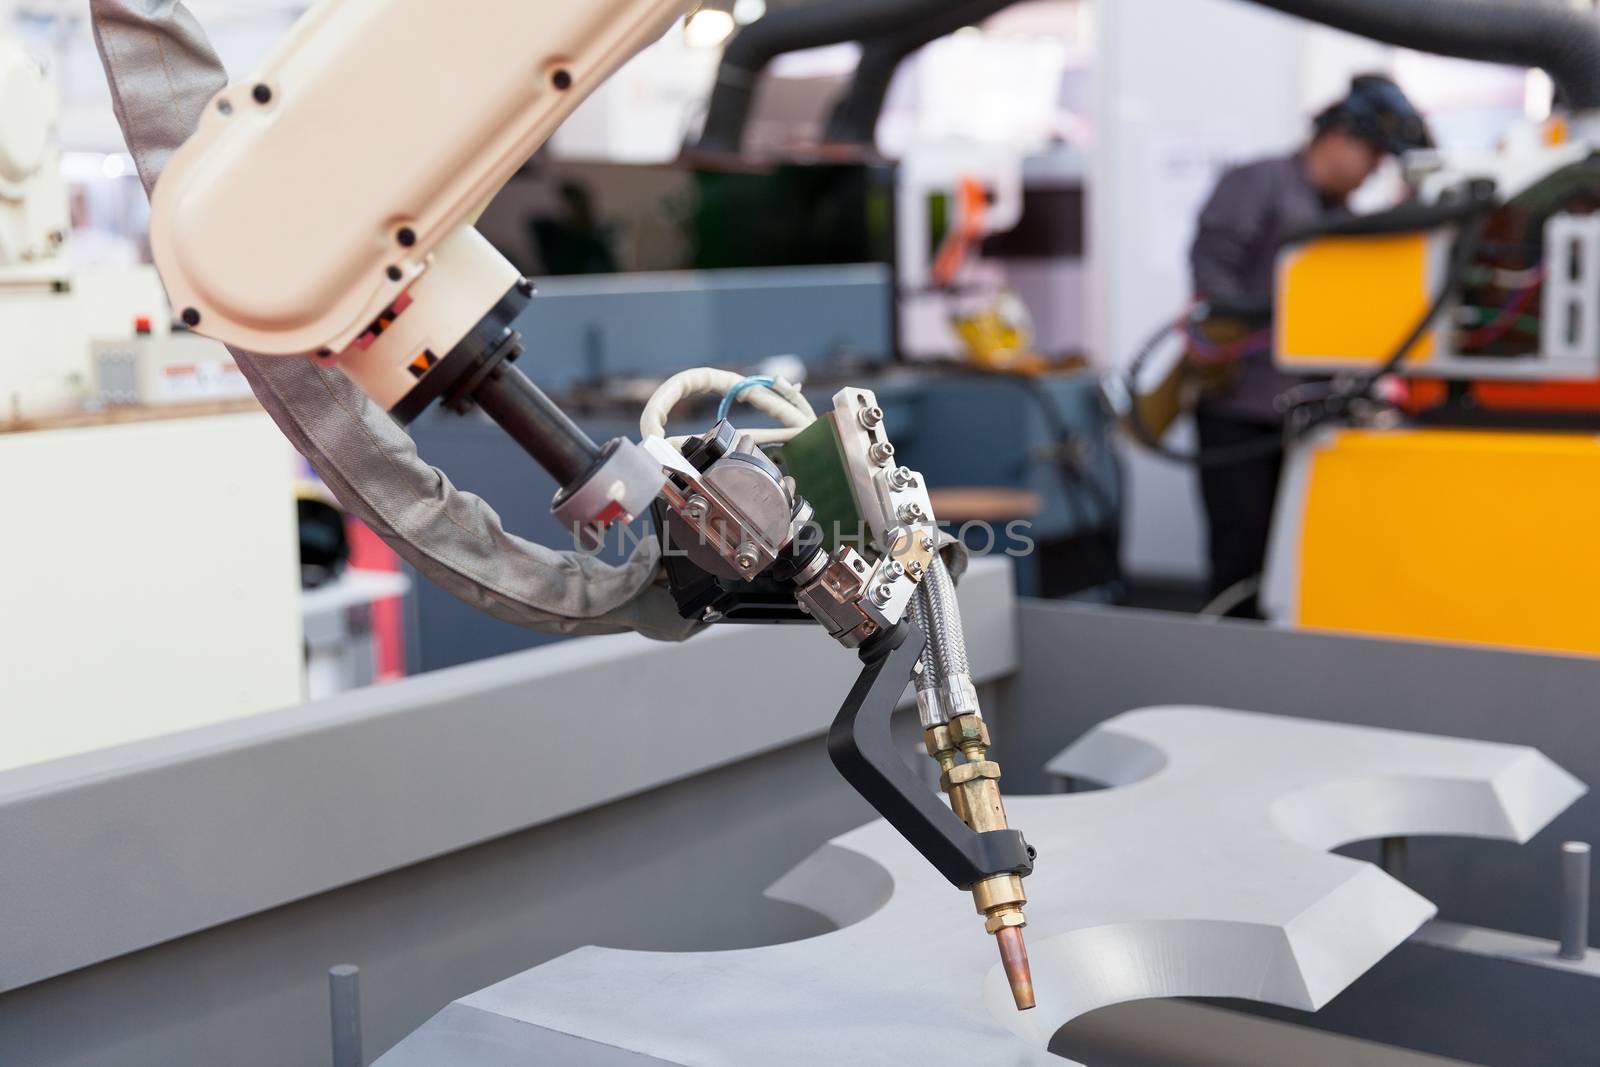 Industrial welding robot arm in the focus, blurred welder in the background by wellphoto